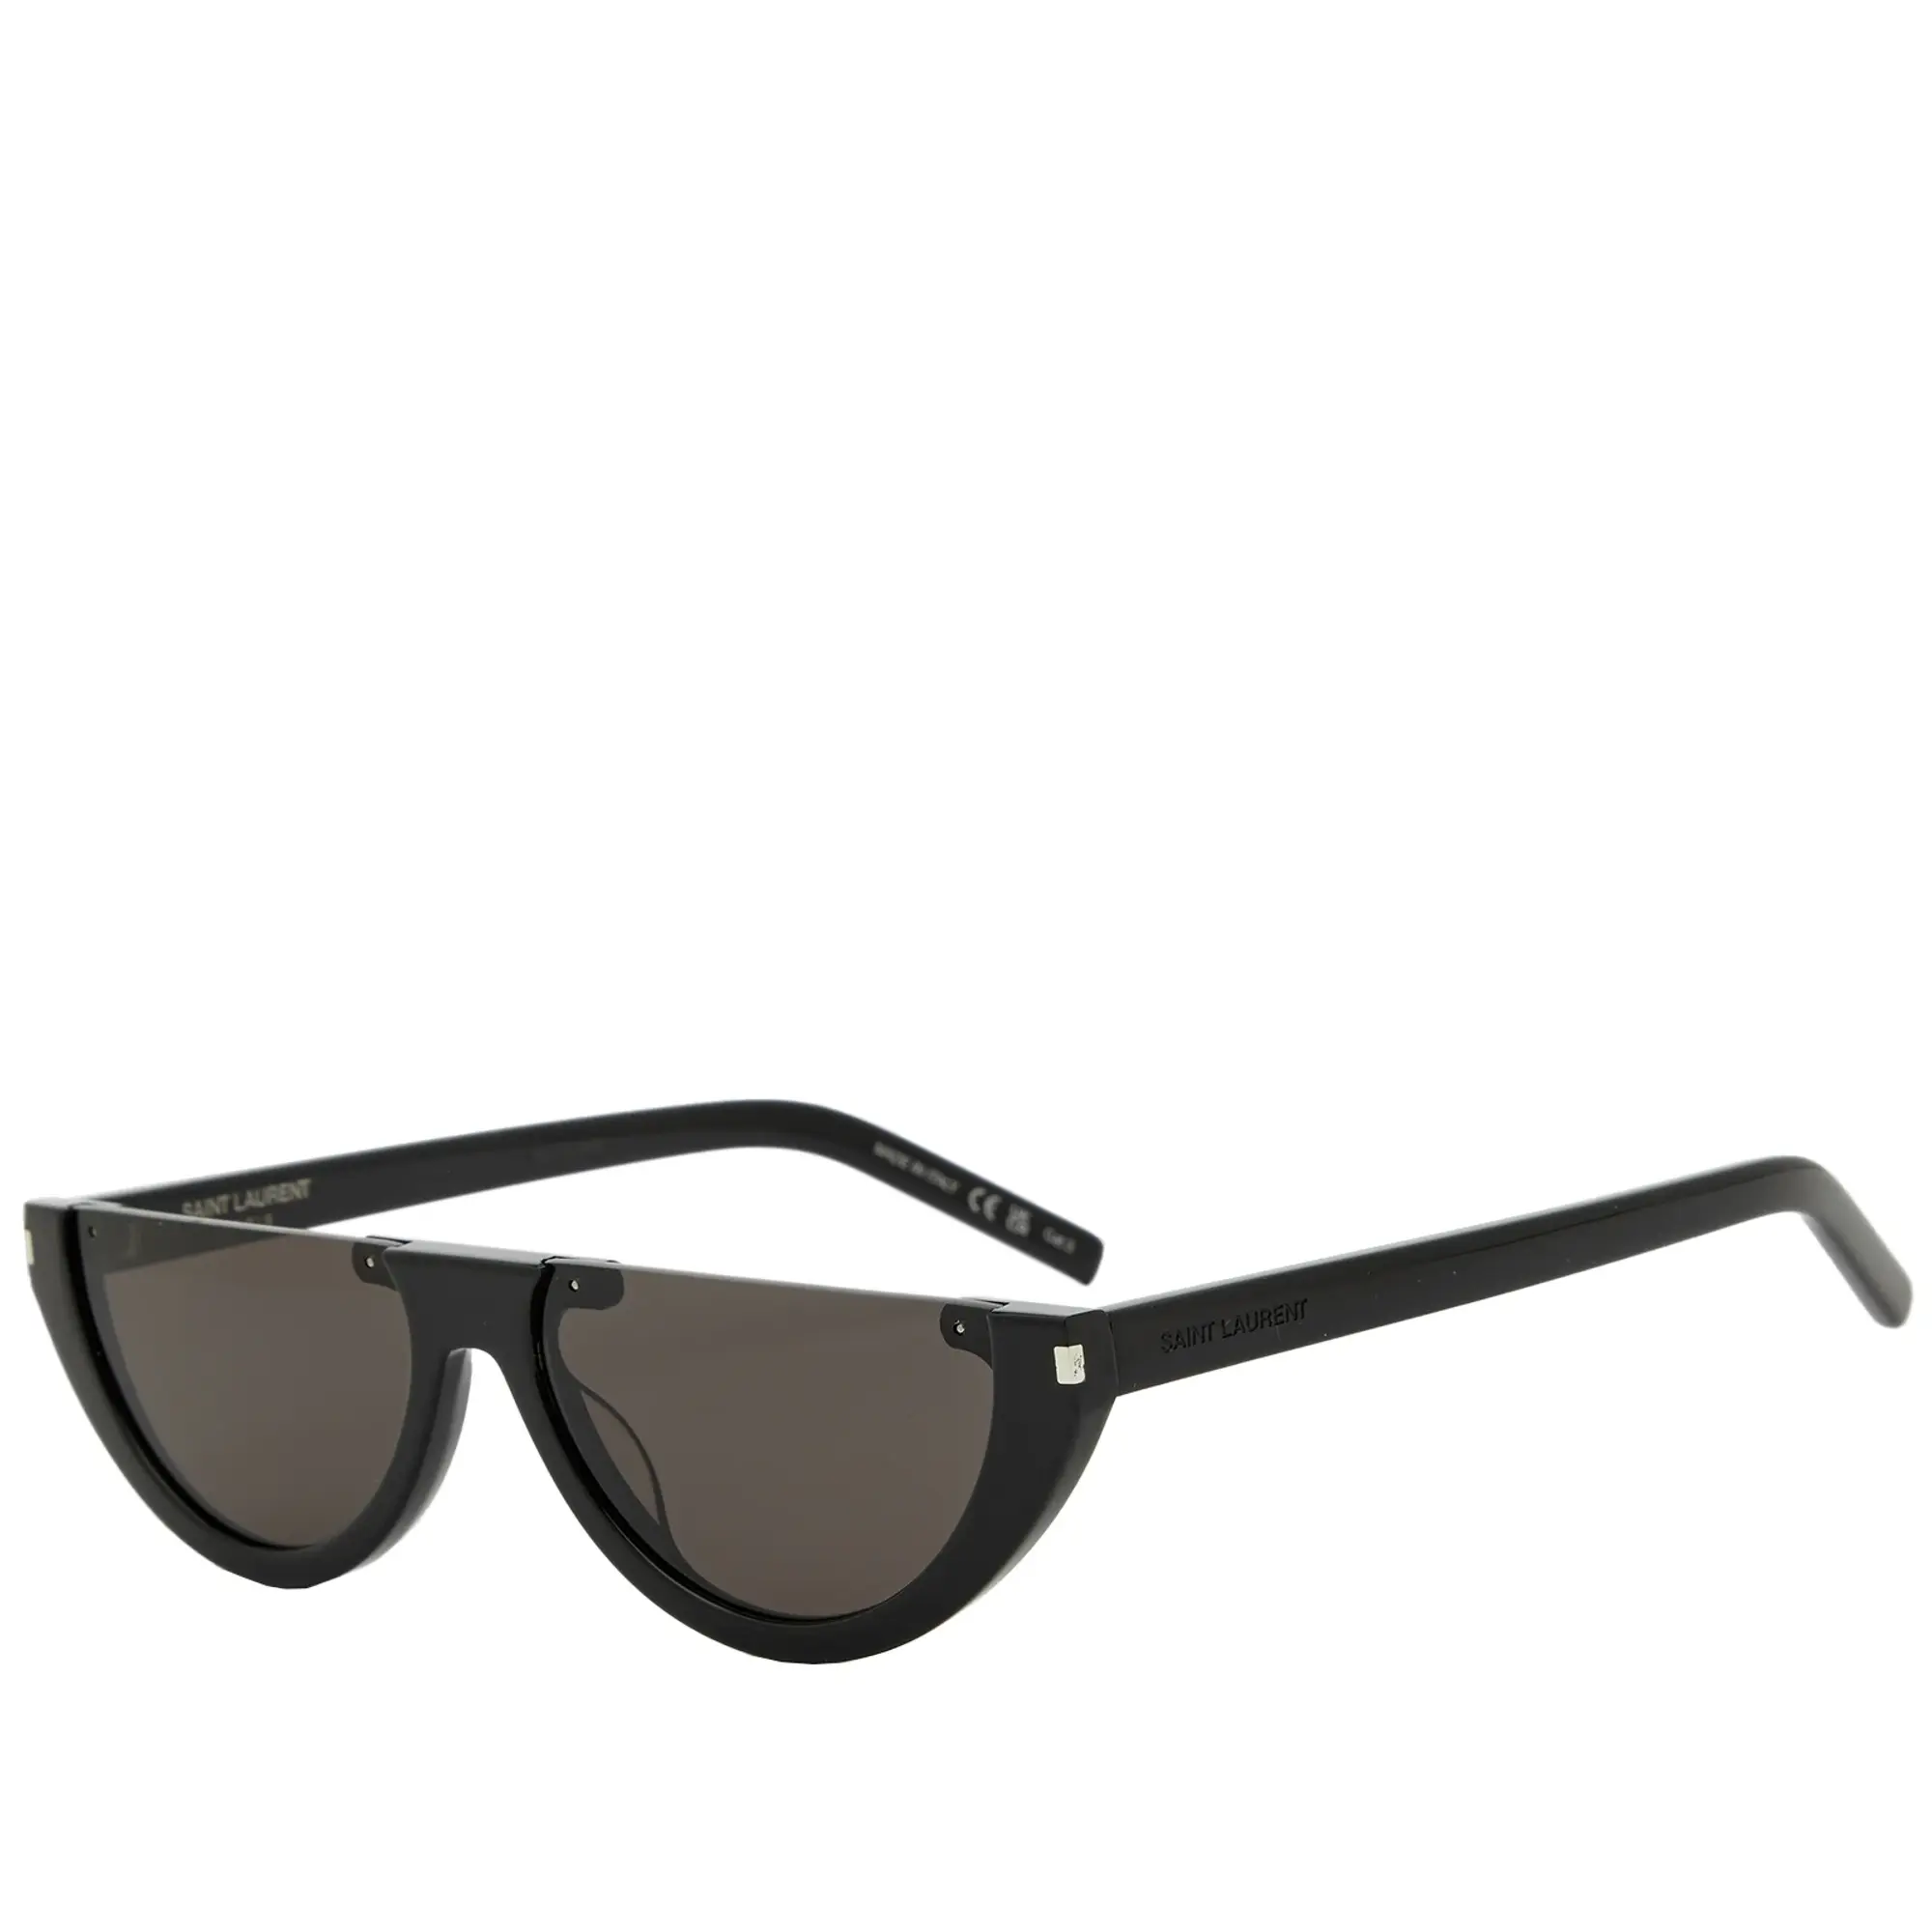 Saint Laurent Sunglasses Saint Laurent SL 563 Sunglasses Black